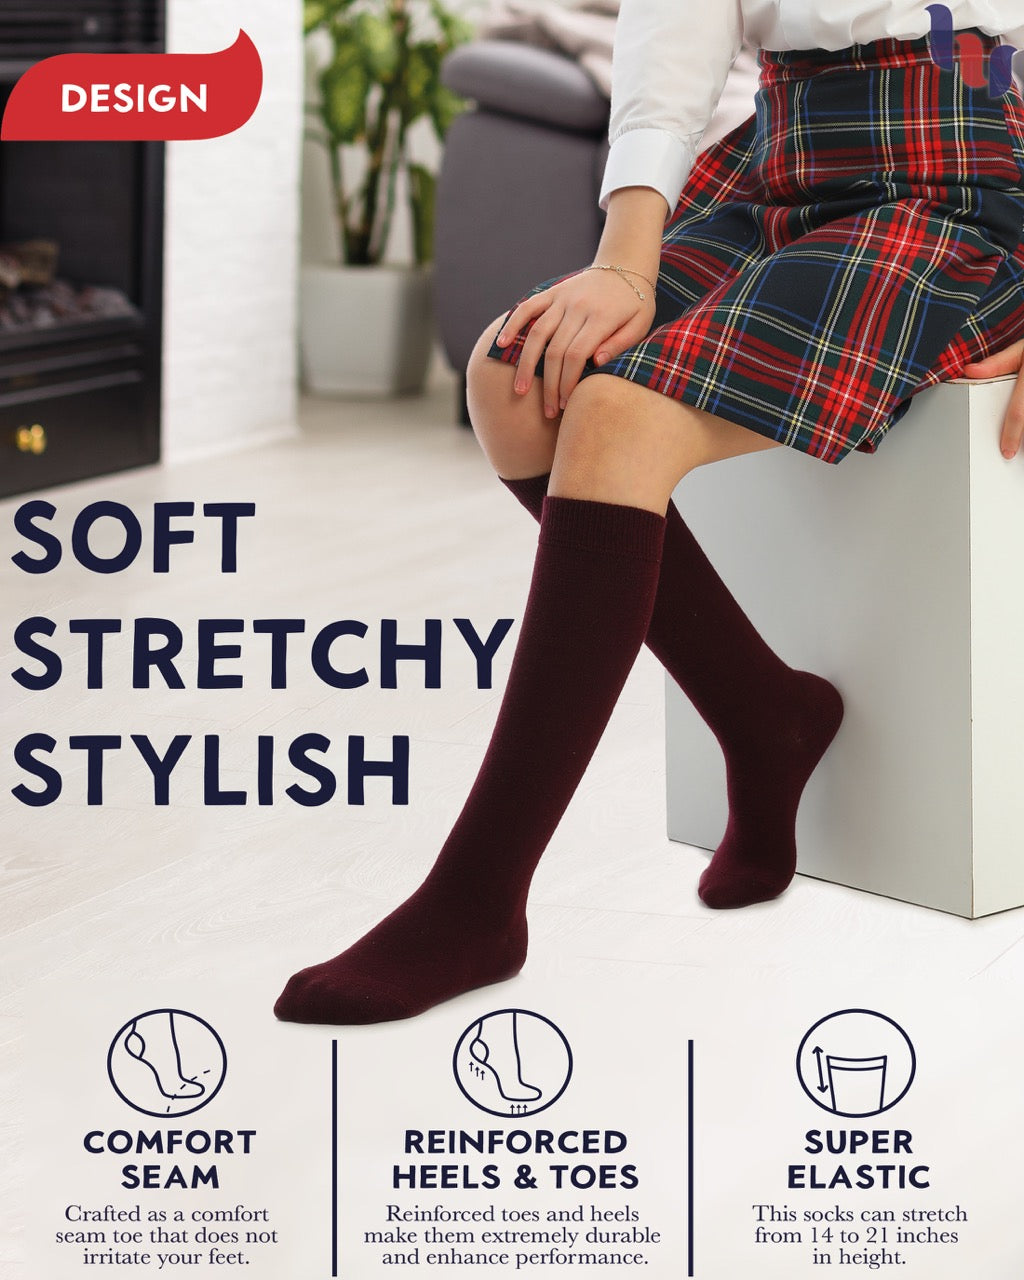 Kids' Plain Cotton Dress Knee-High Socks, 4 Pairs